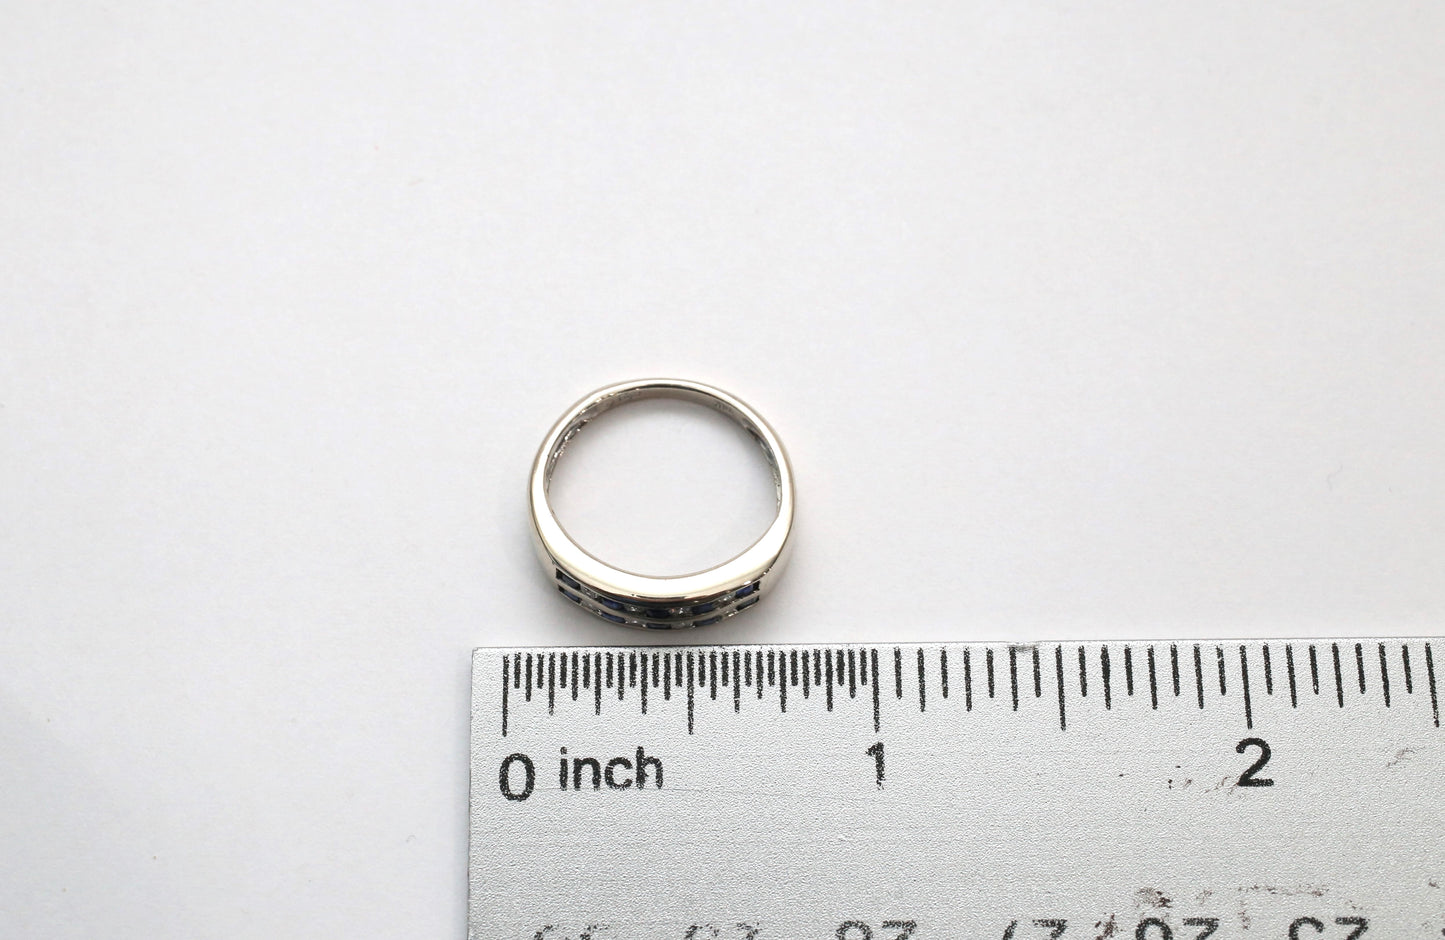 14k White Gold Sapphire & Diamond Ring, Size 5.25 - 2.1g